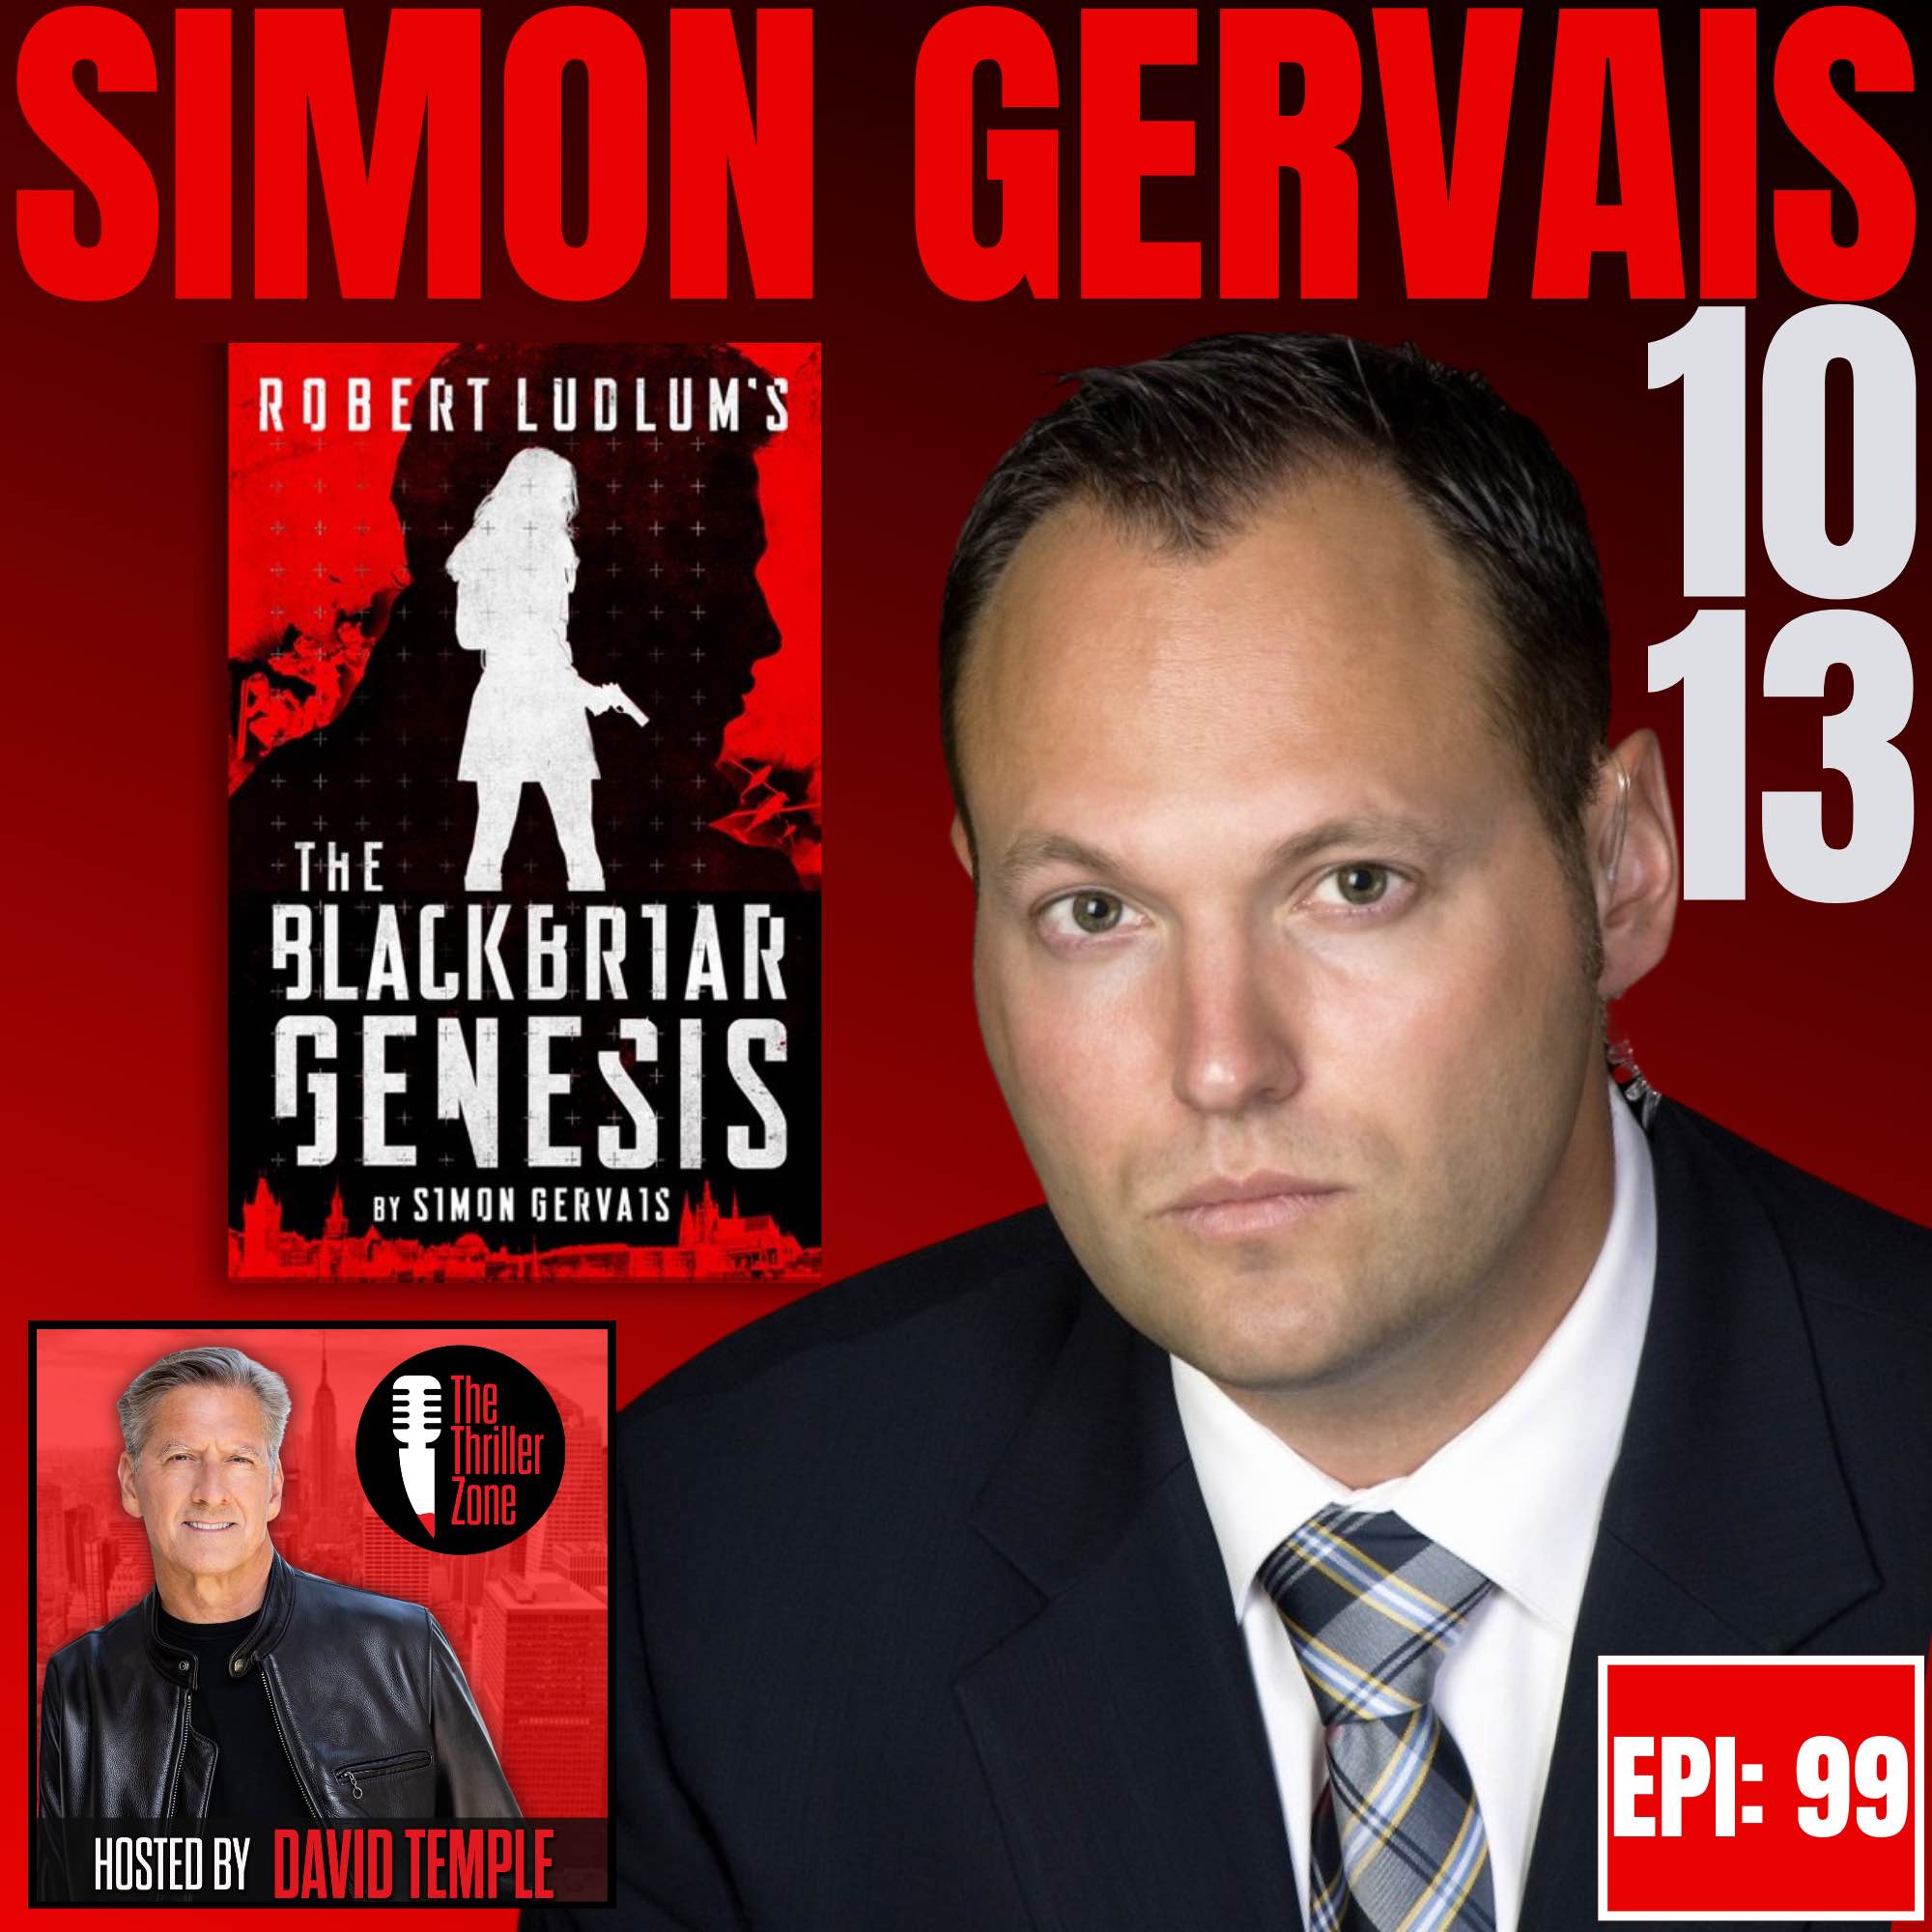 Simon Gervais, author of The Blackbriar Genesis Image